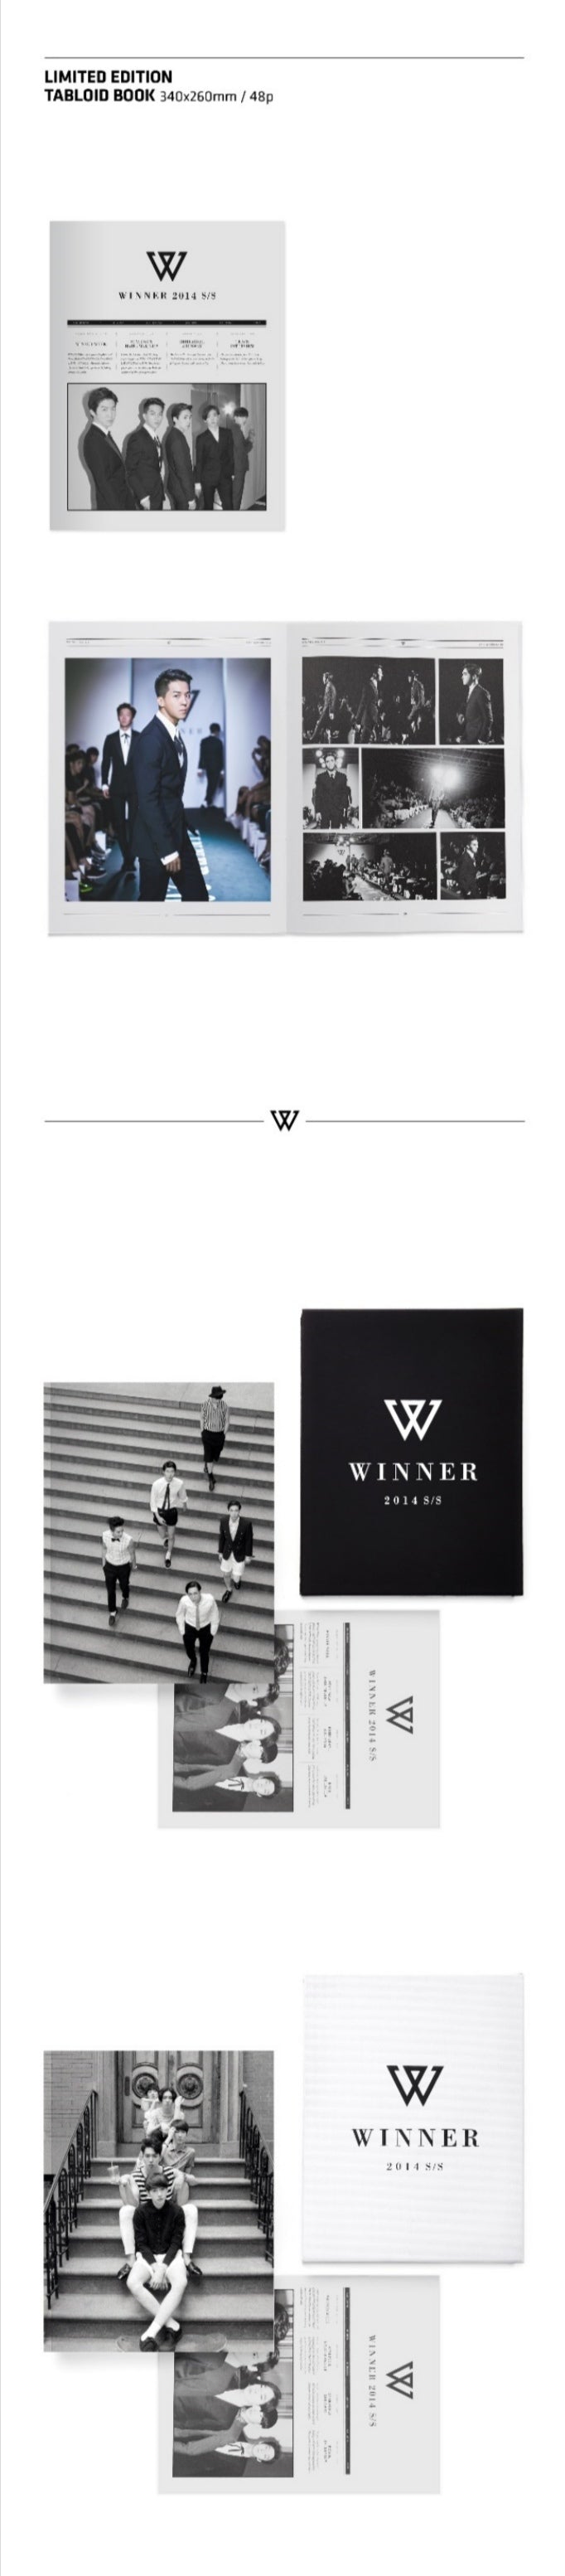 [PREORDER] WINNER - WINNER DEBUT ALBUM [2014 S/S] LIMITED EDITION